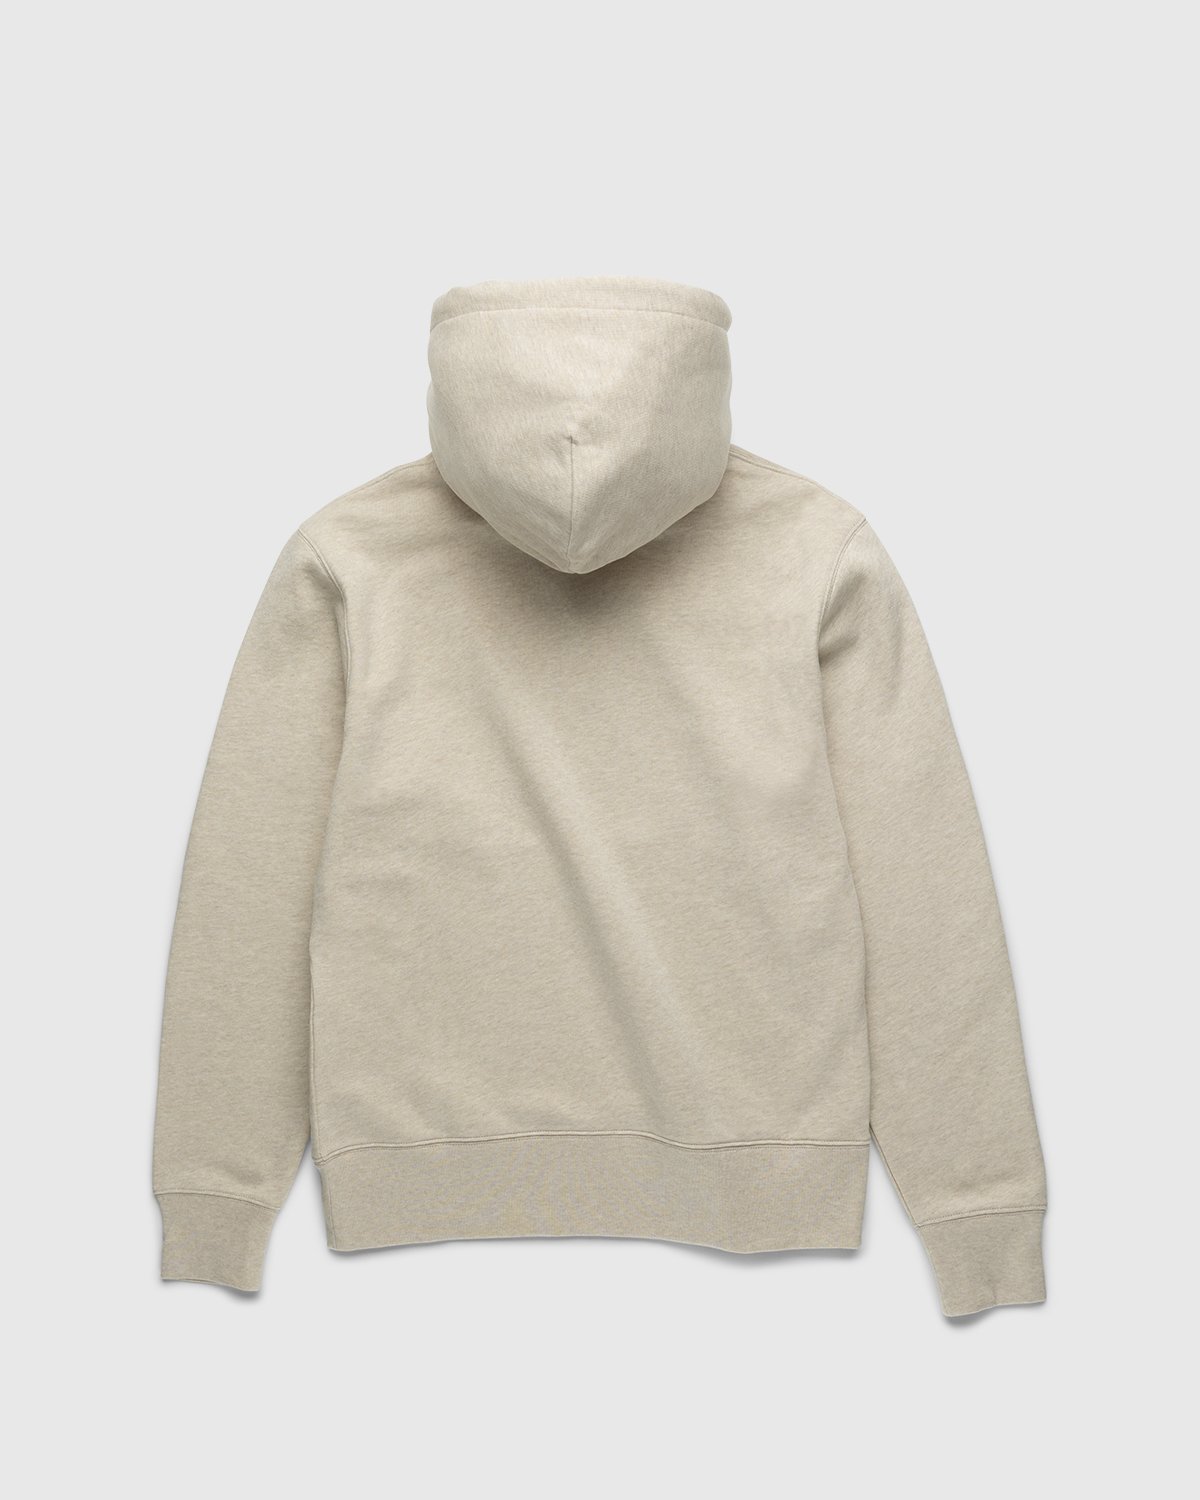 Acne Studios - Organic Cotton Hooded Sweatshirt Oatmeal Melange - Clothing - Beige - Image 2